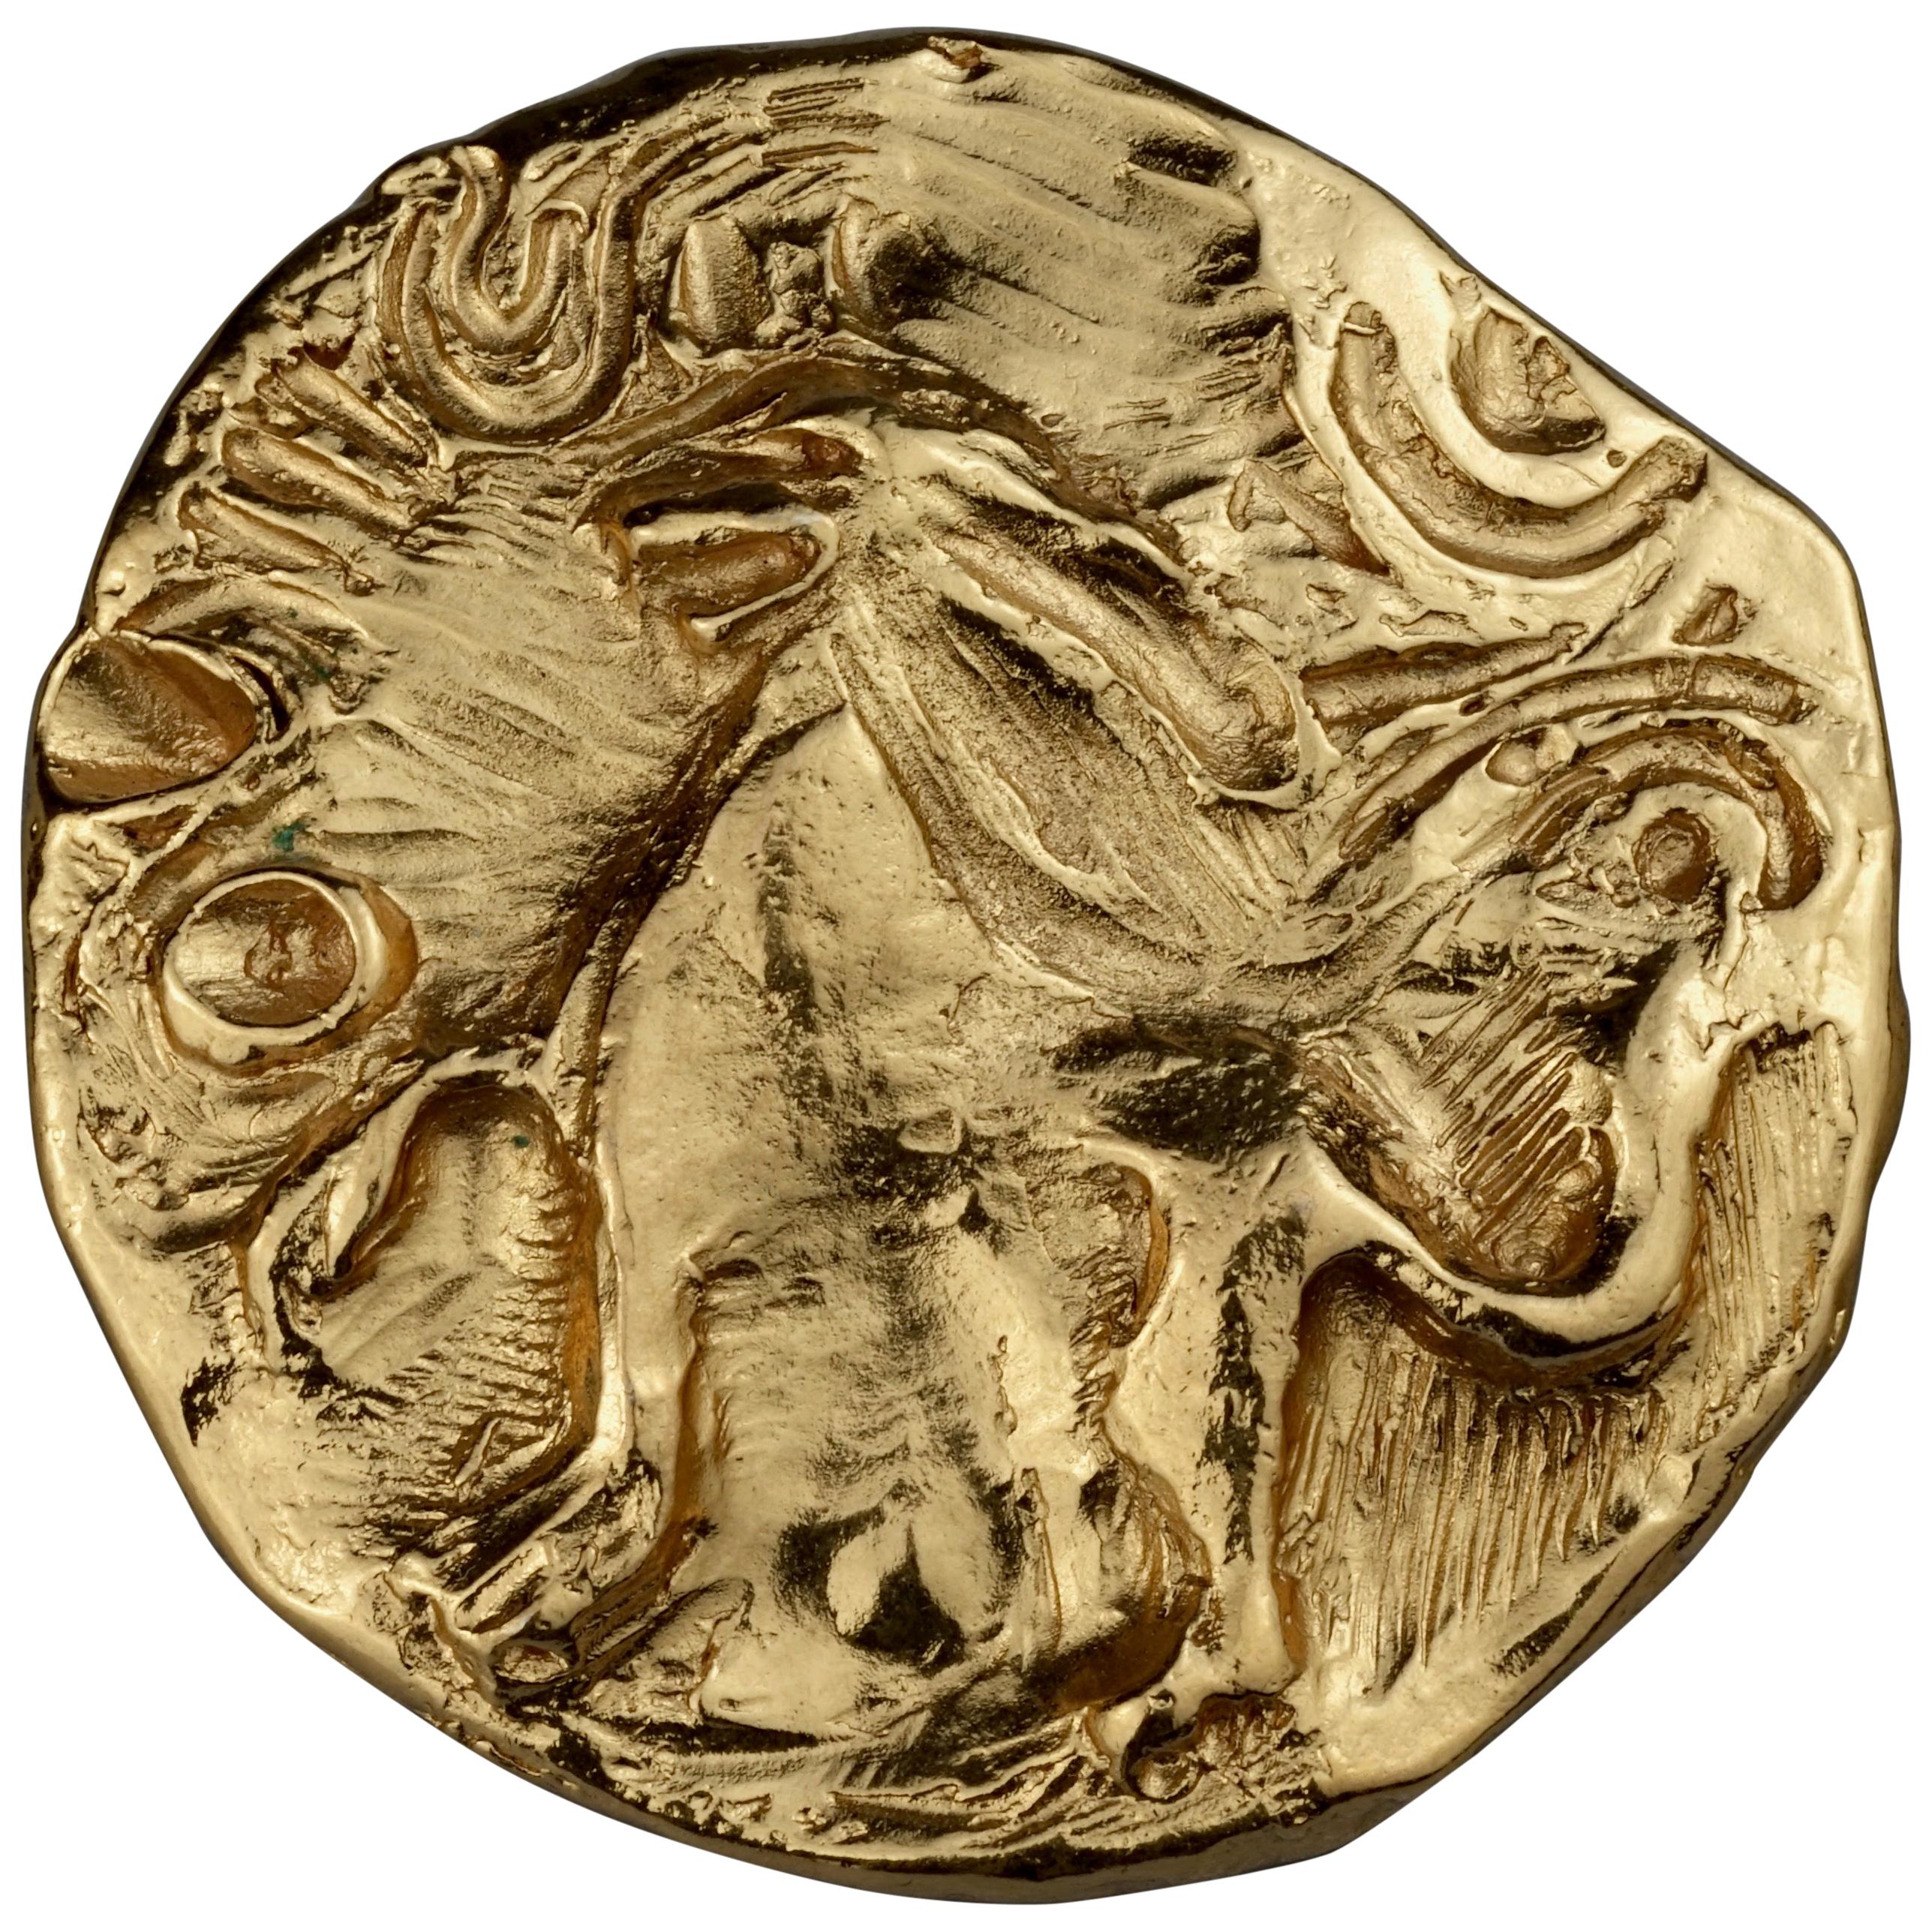 Vintage YVES SAINT LAURENT Ysl by Robert Goossens Lion Medallion Pendant Brooch